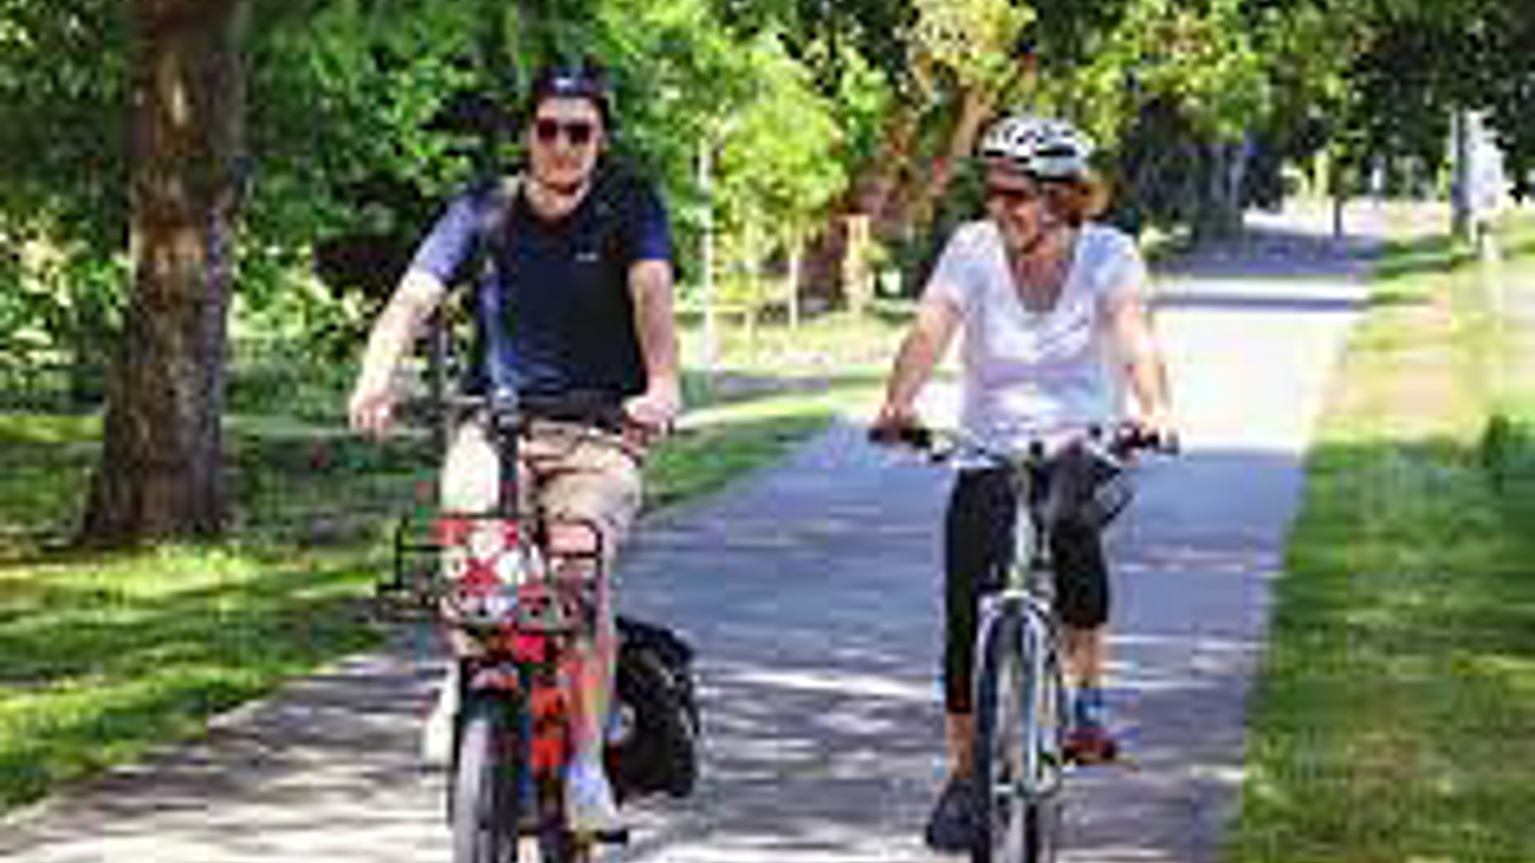 A man and a woman ride bikes along a flat, concrete path through a park.